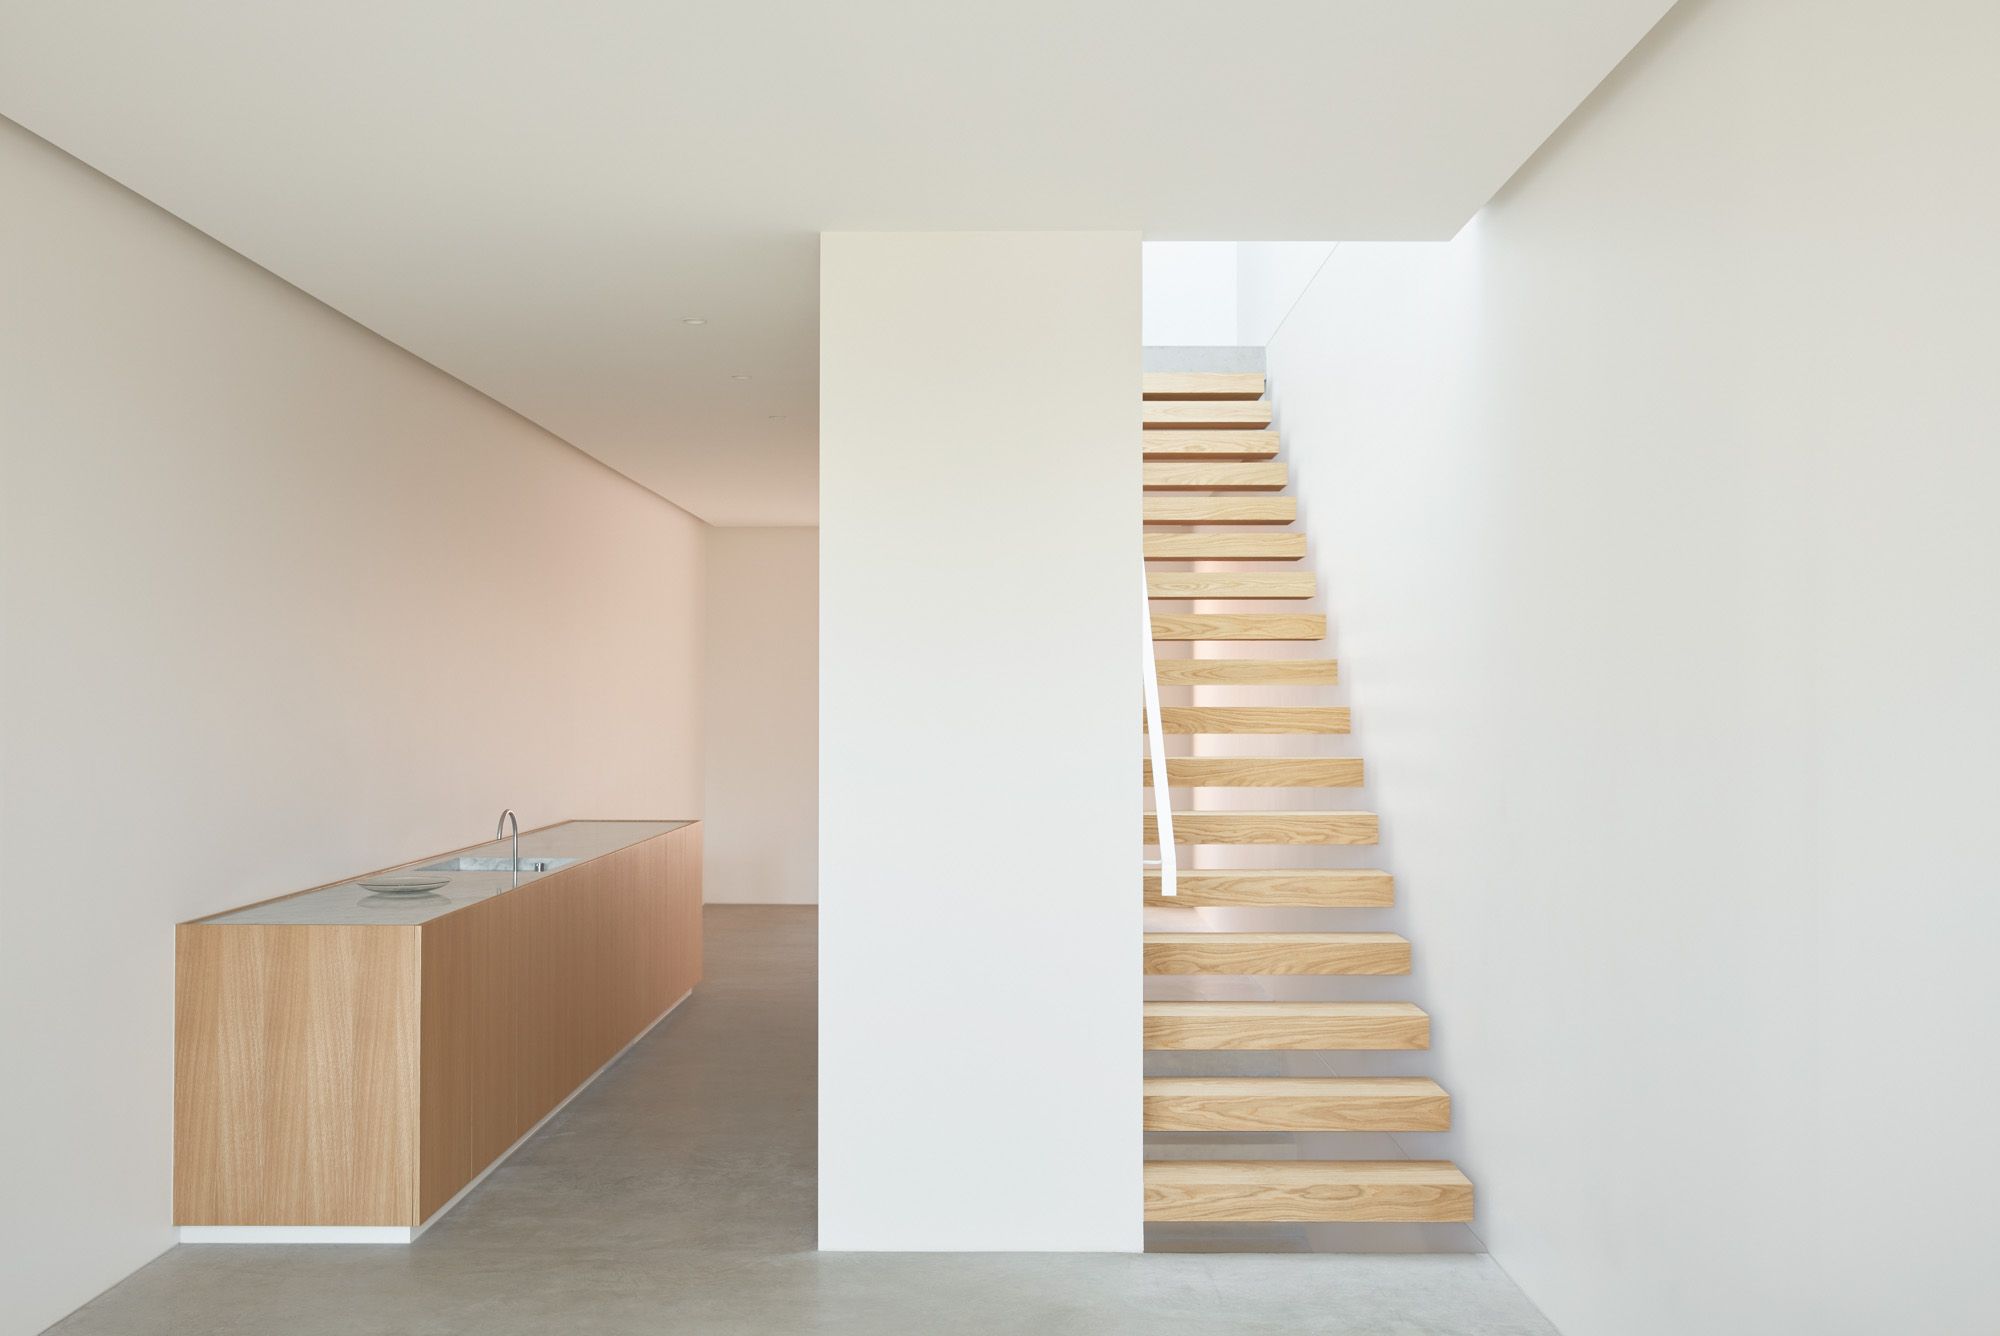 Skinny House by Oliver du Puy Architects